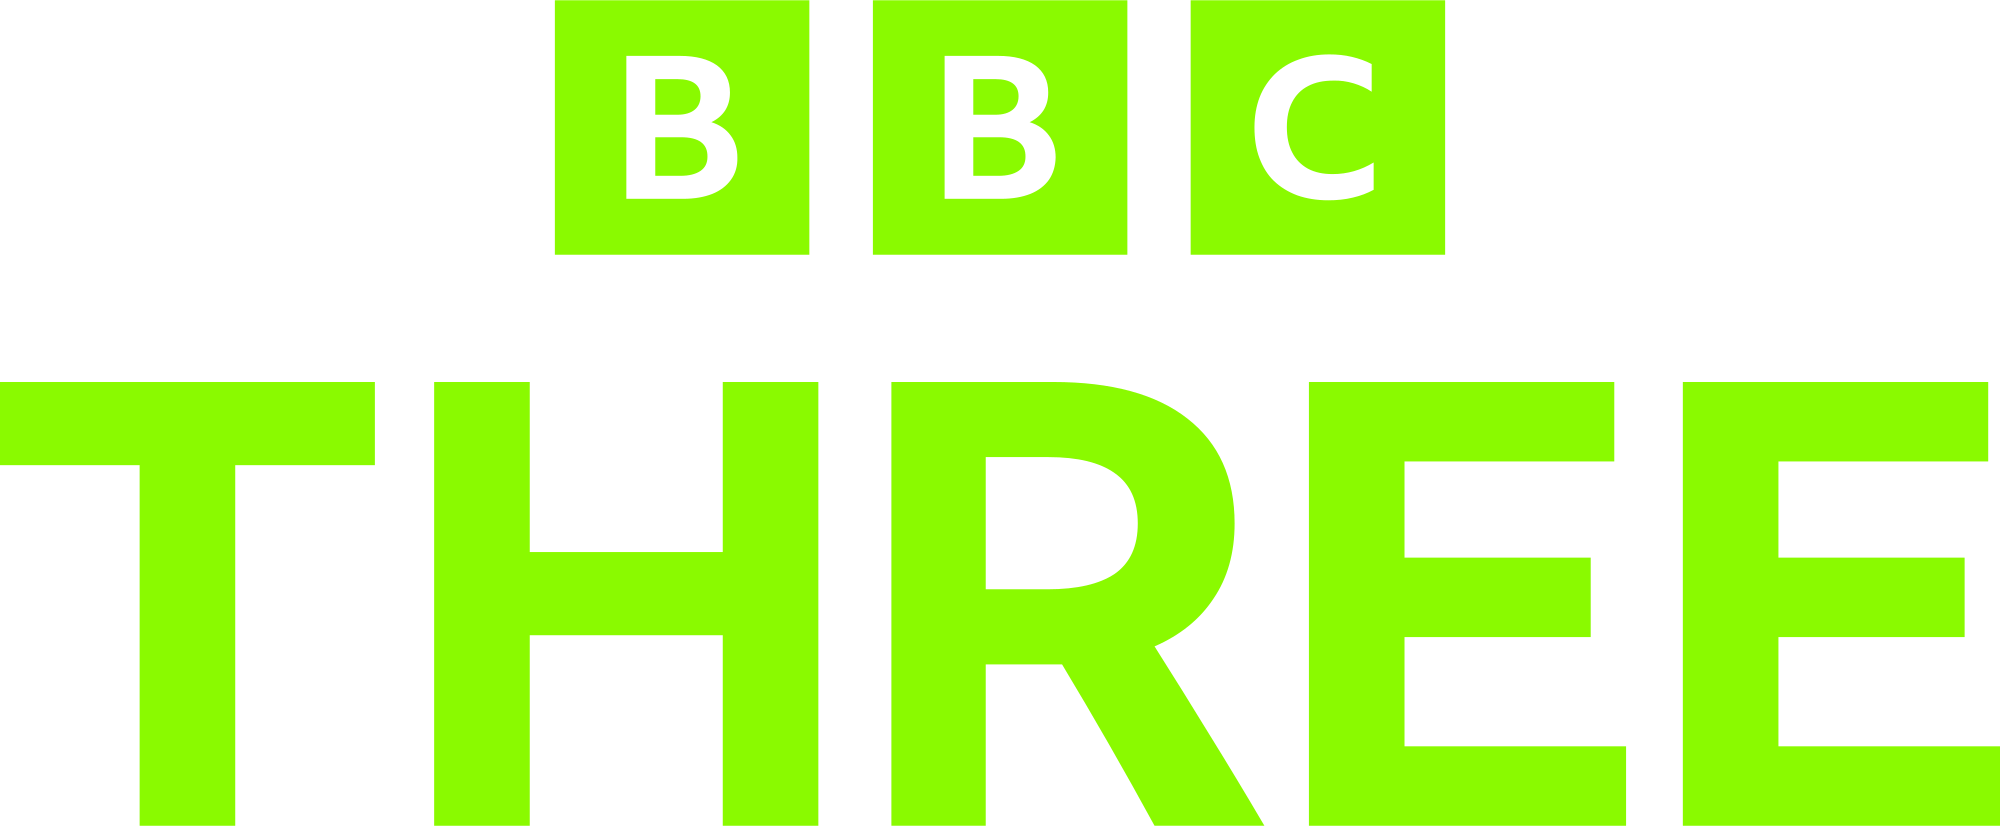 BBC Three - network